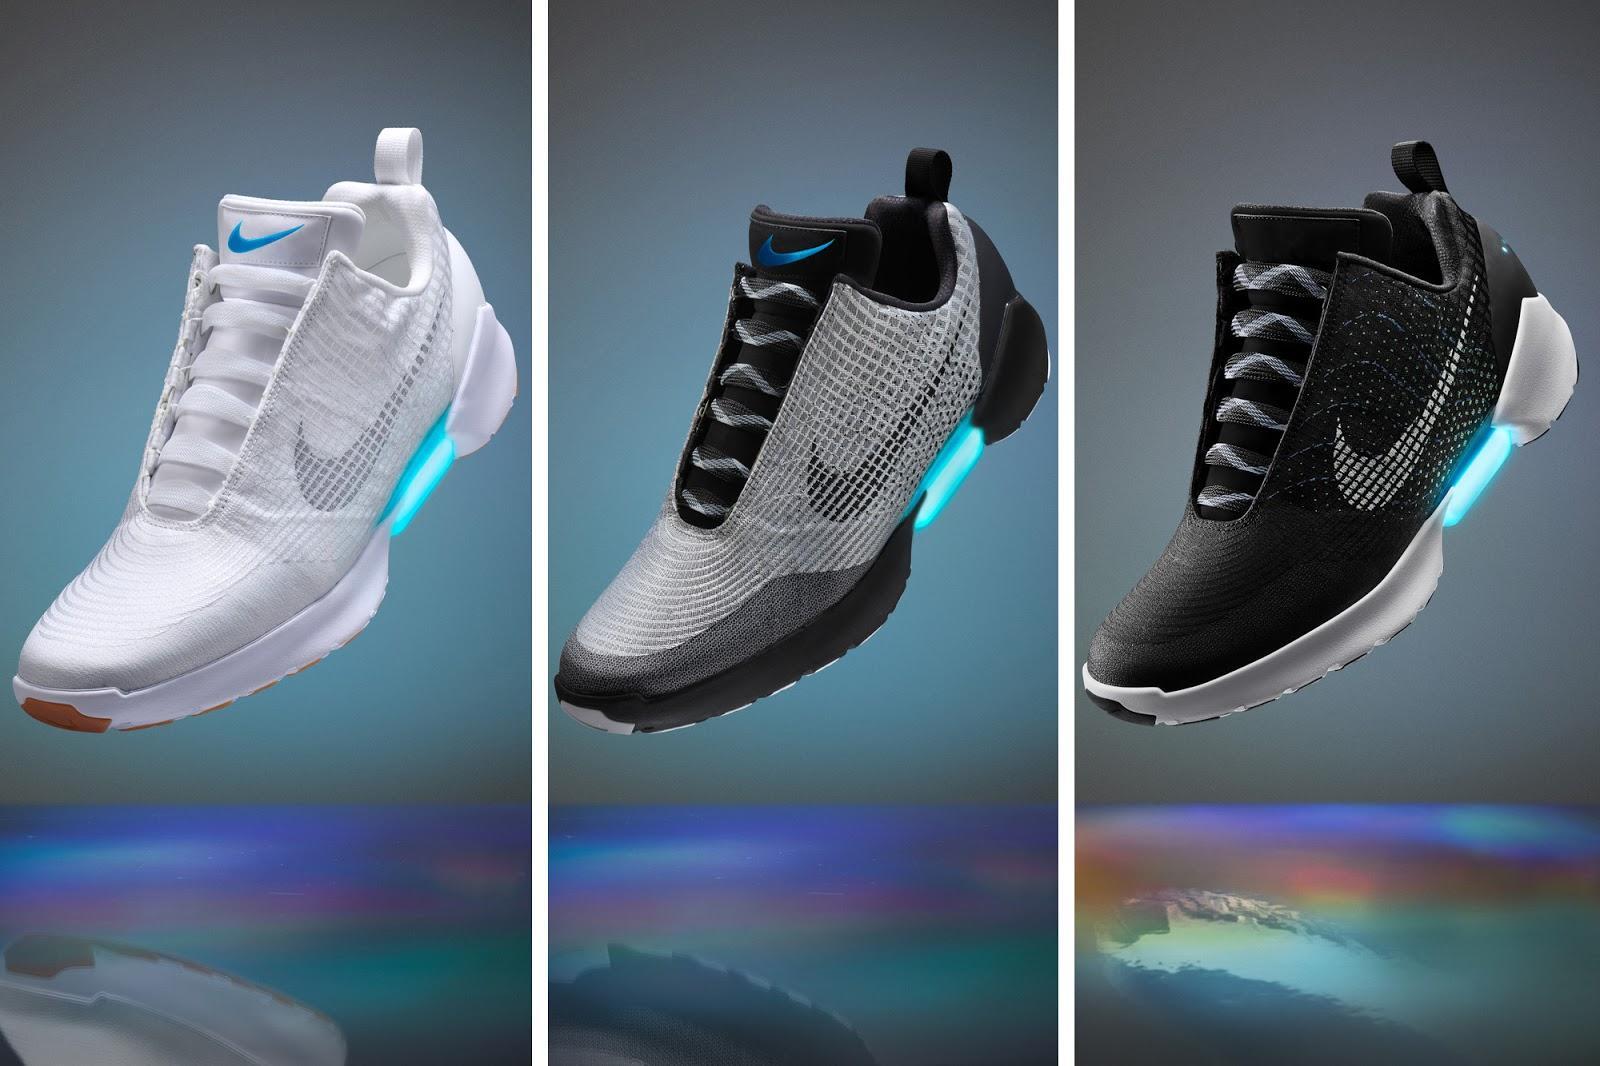 Nike's Self-Lacing Hyperadapt Shoes Coming in November